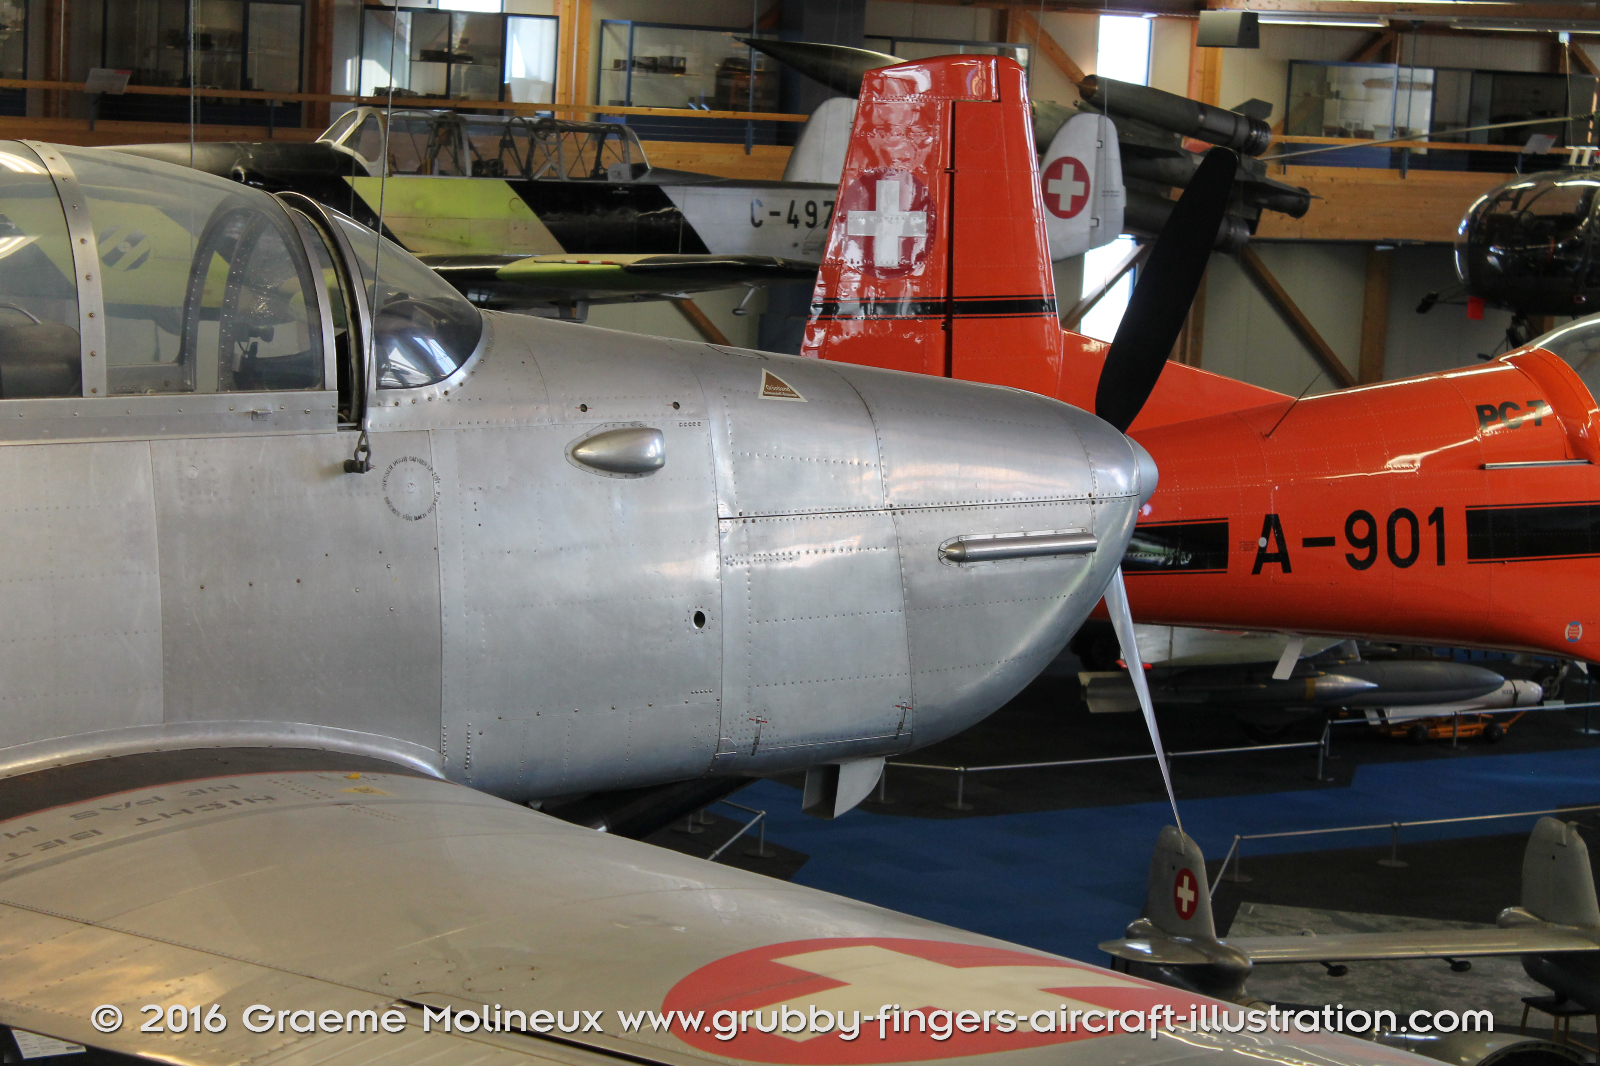 PILATUS_P-2_A-801_Swiss_Air_Force_Museum_2015_07_GrubbyFingers